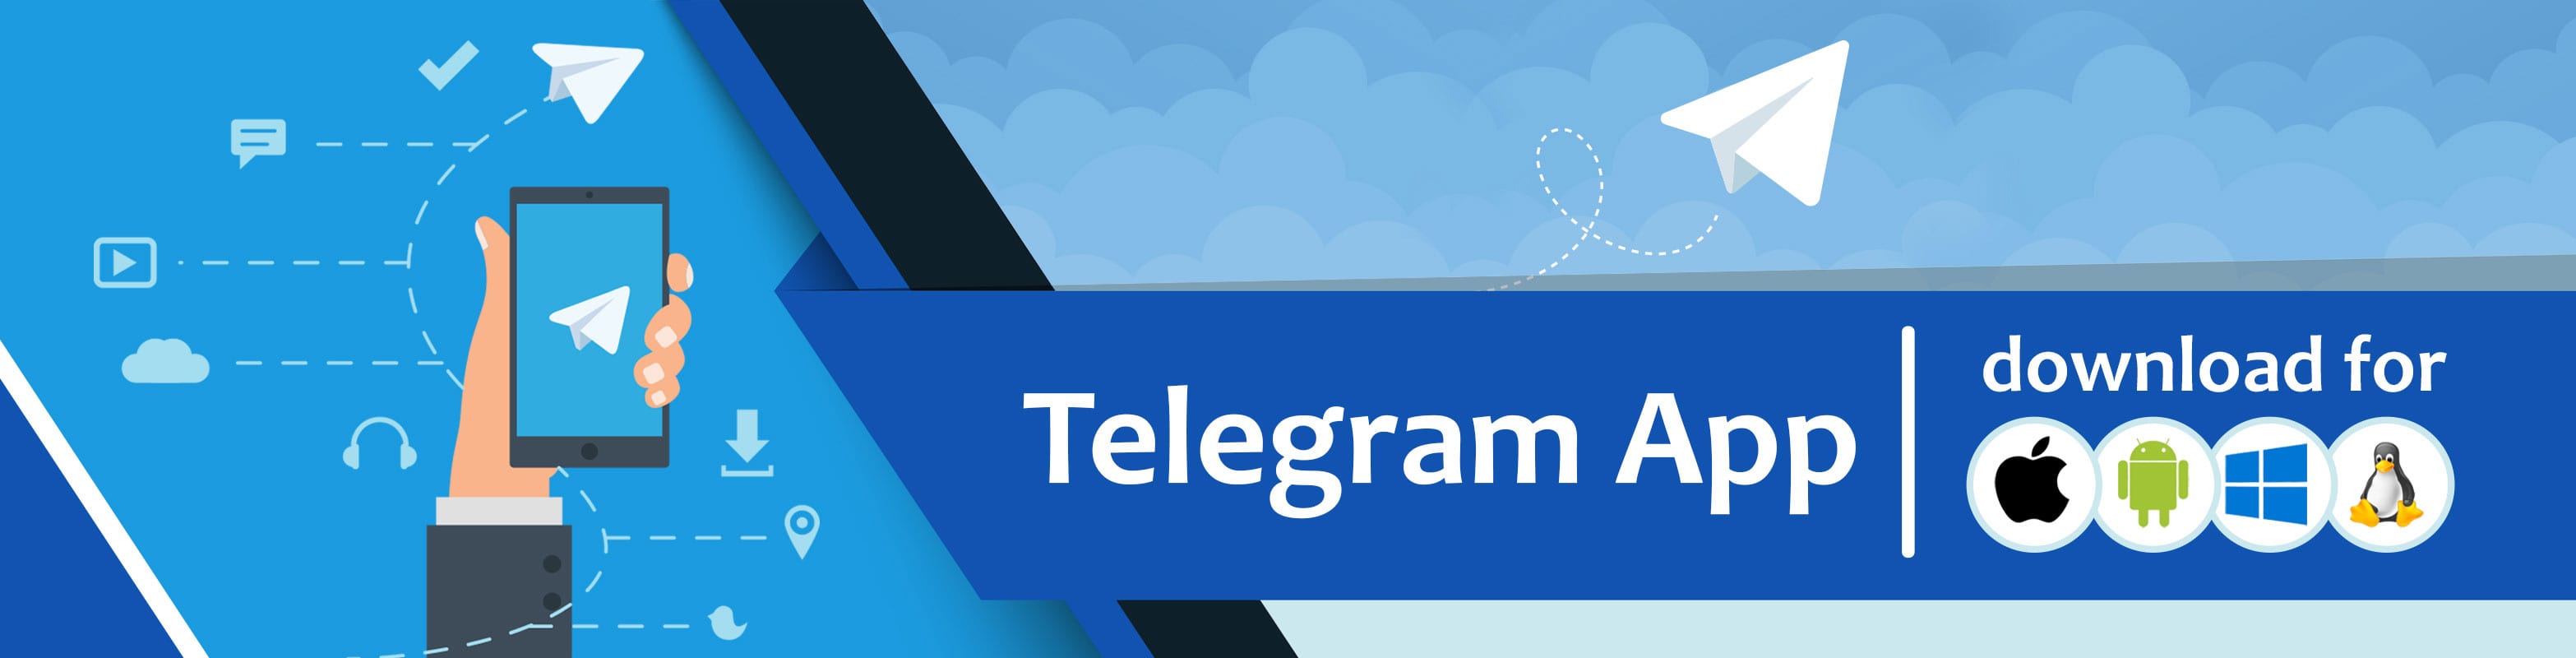 What is a telegram app - snetpoi